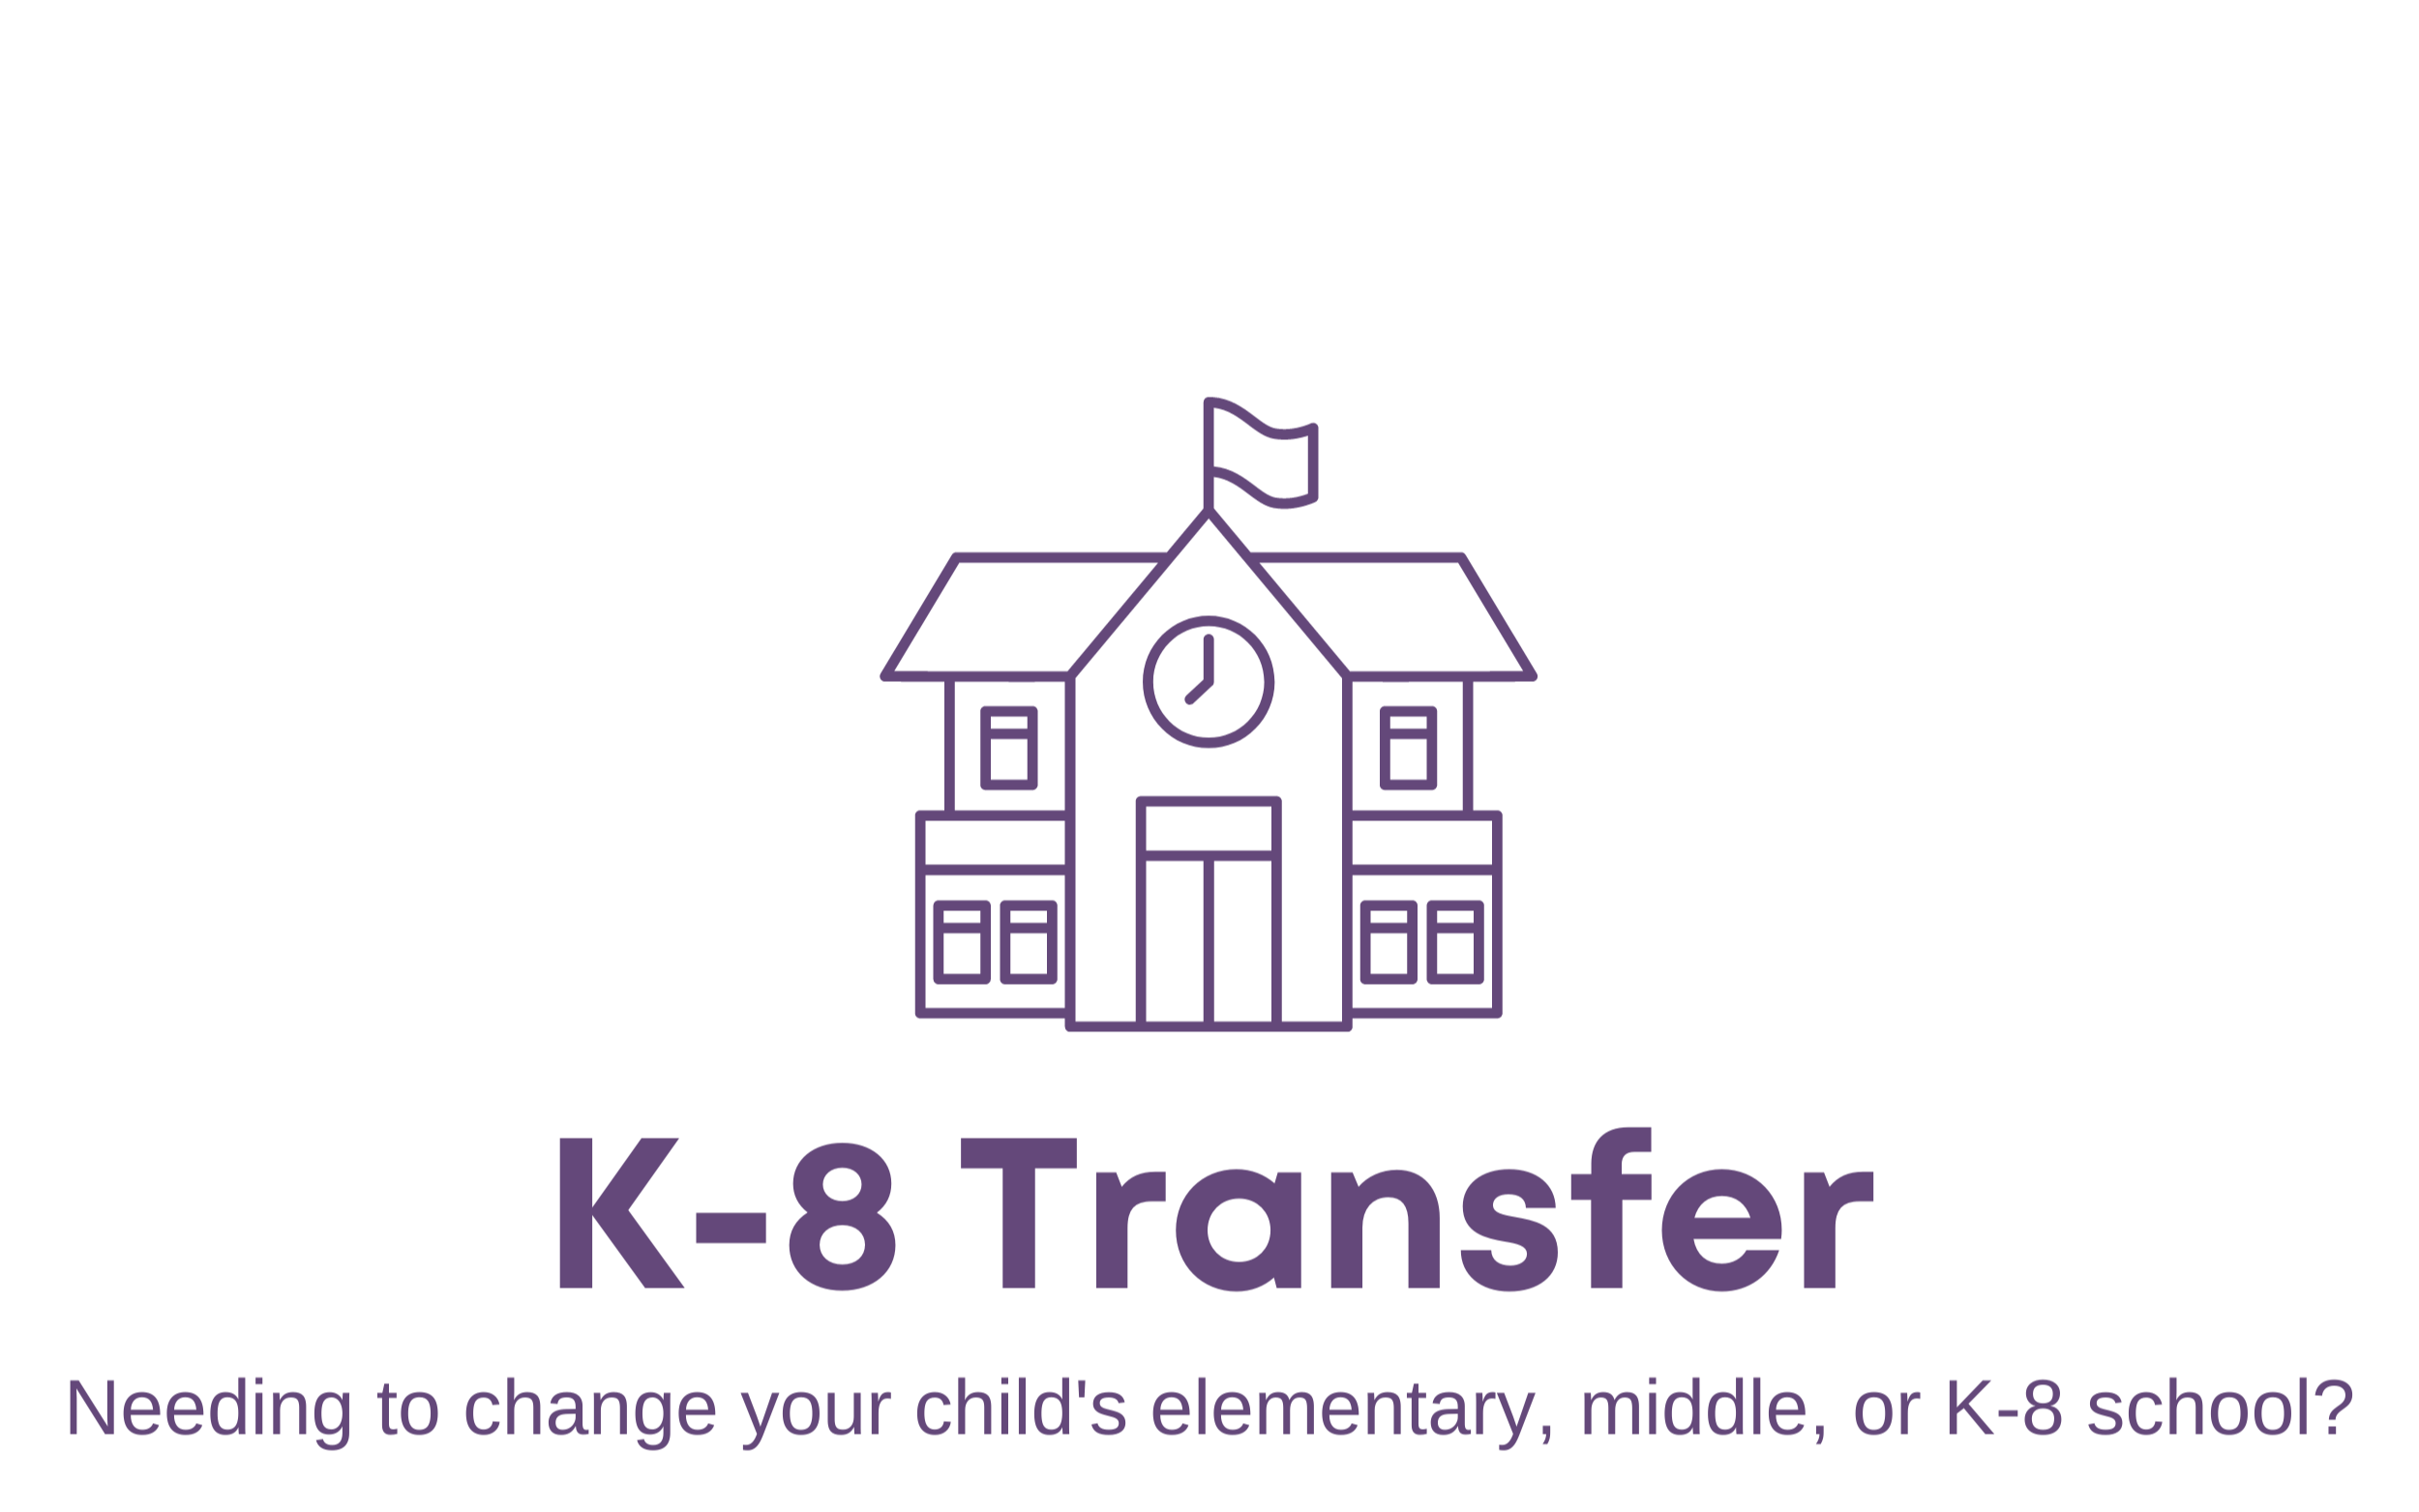 K-8 transfer